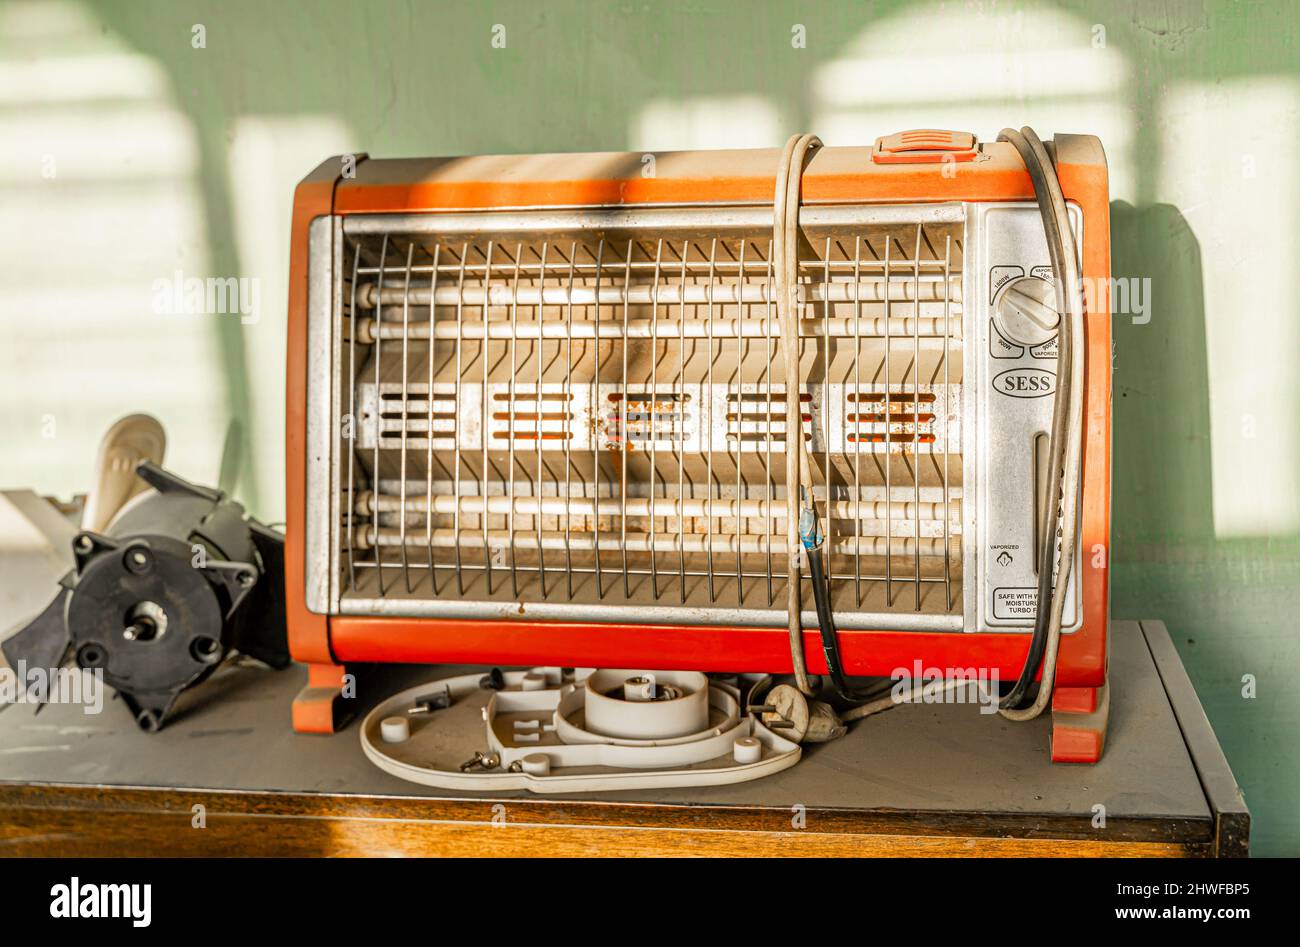 Sess home heater, dusty Stock Photo